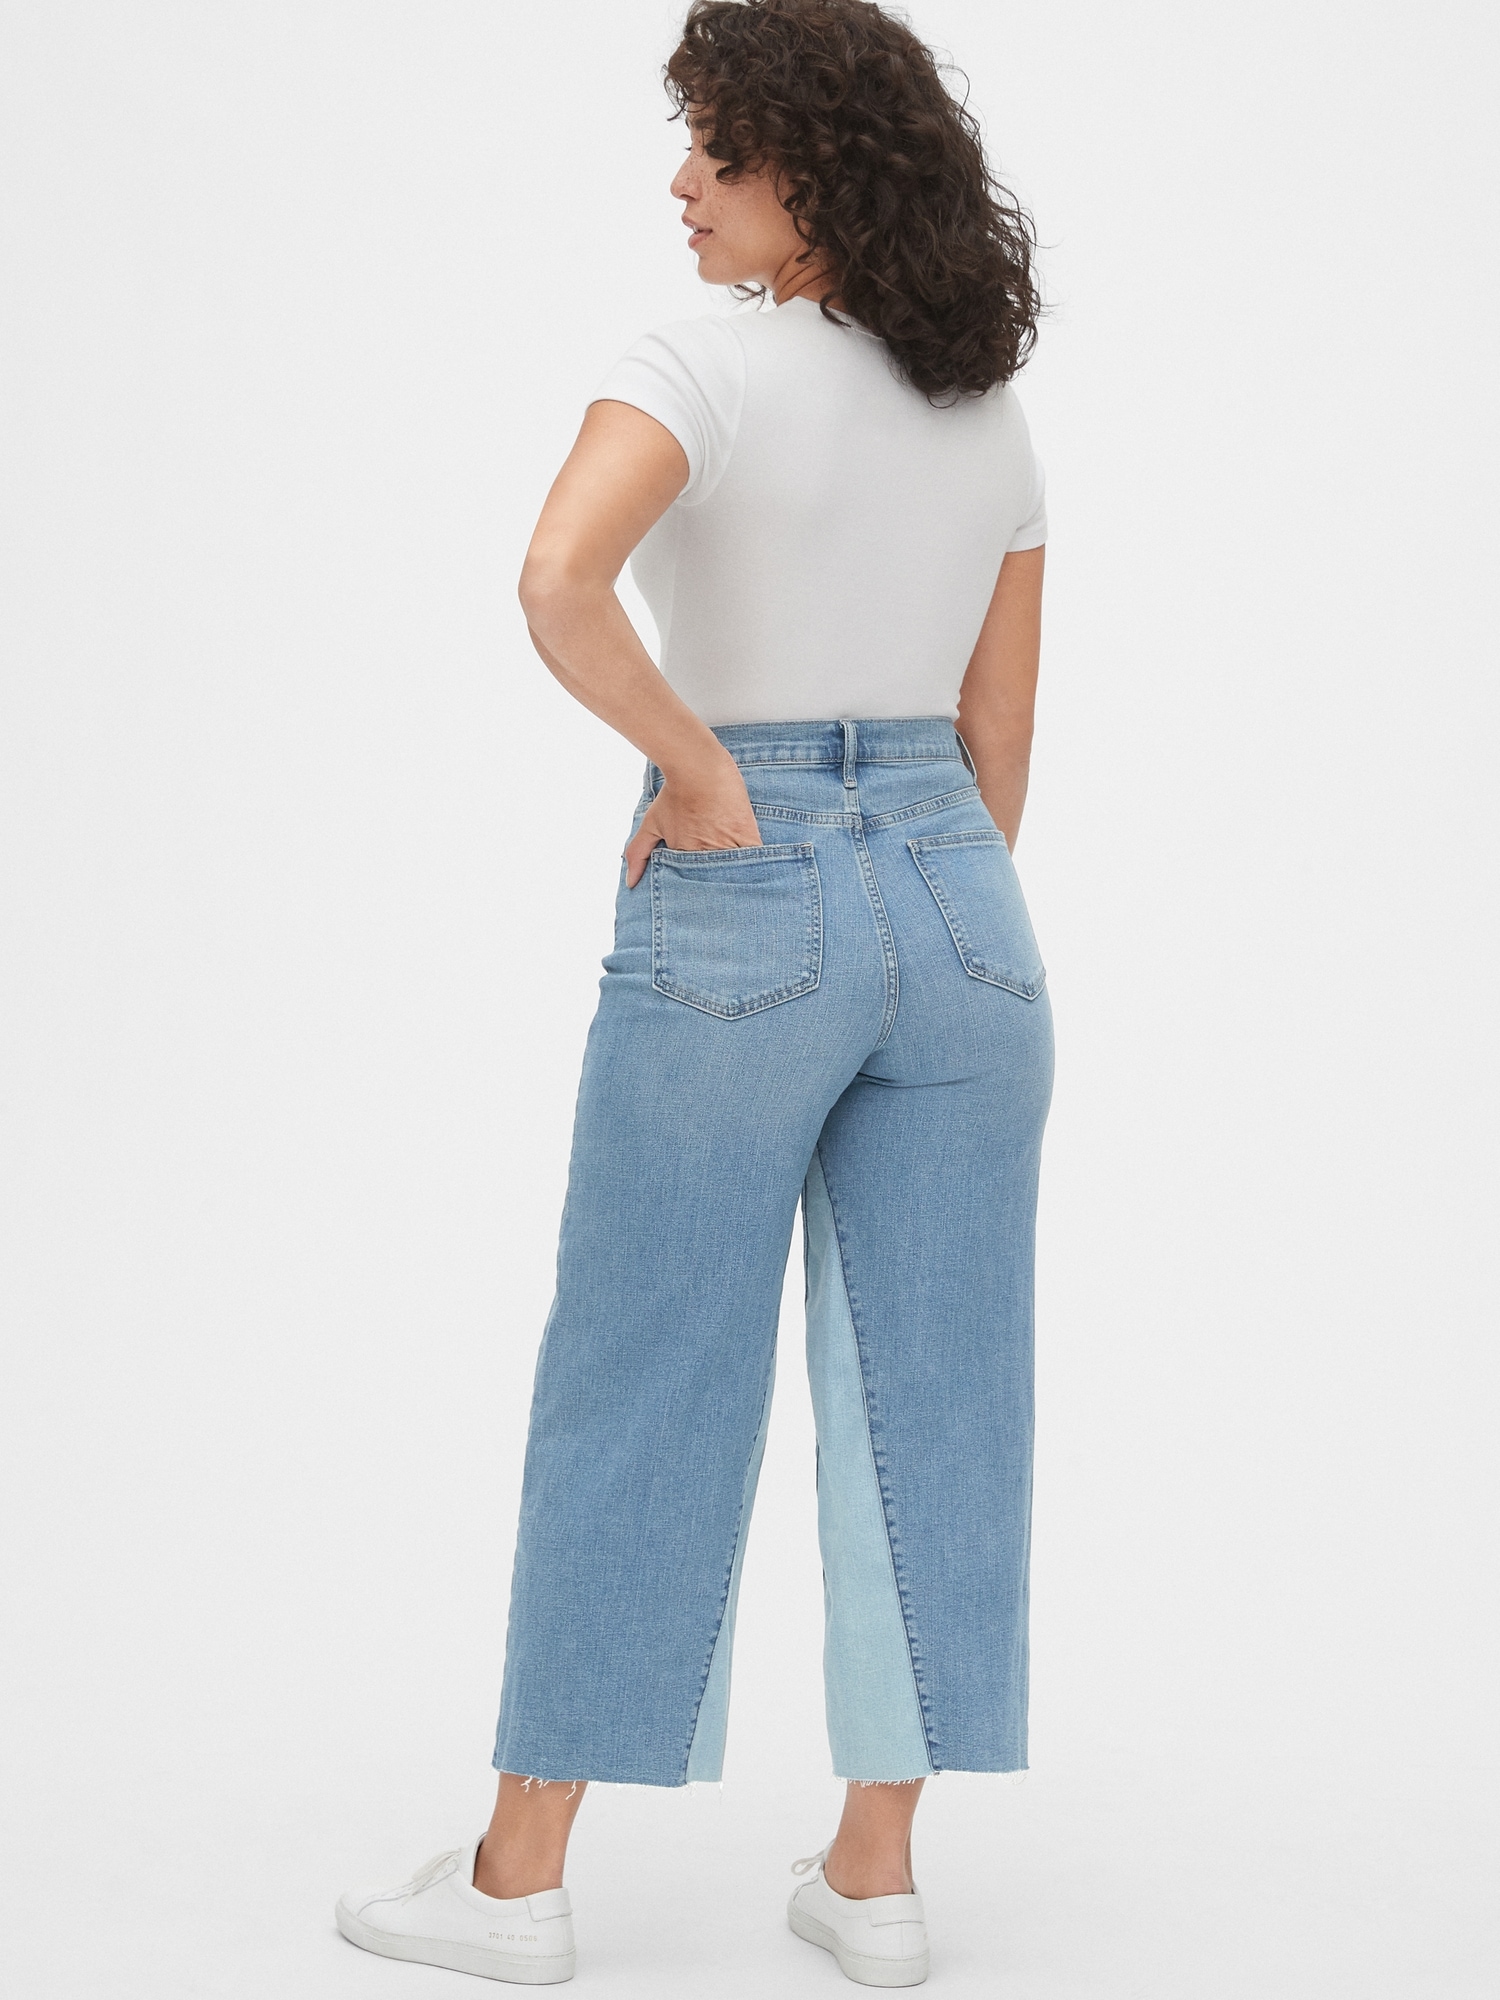 GRAPENT Jean Capris for Women Wide Leg Jeans High Waisted Crop Denim Capri  Pants Stretchy Baggy